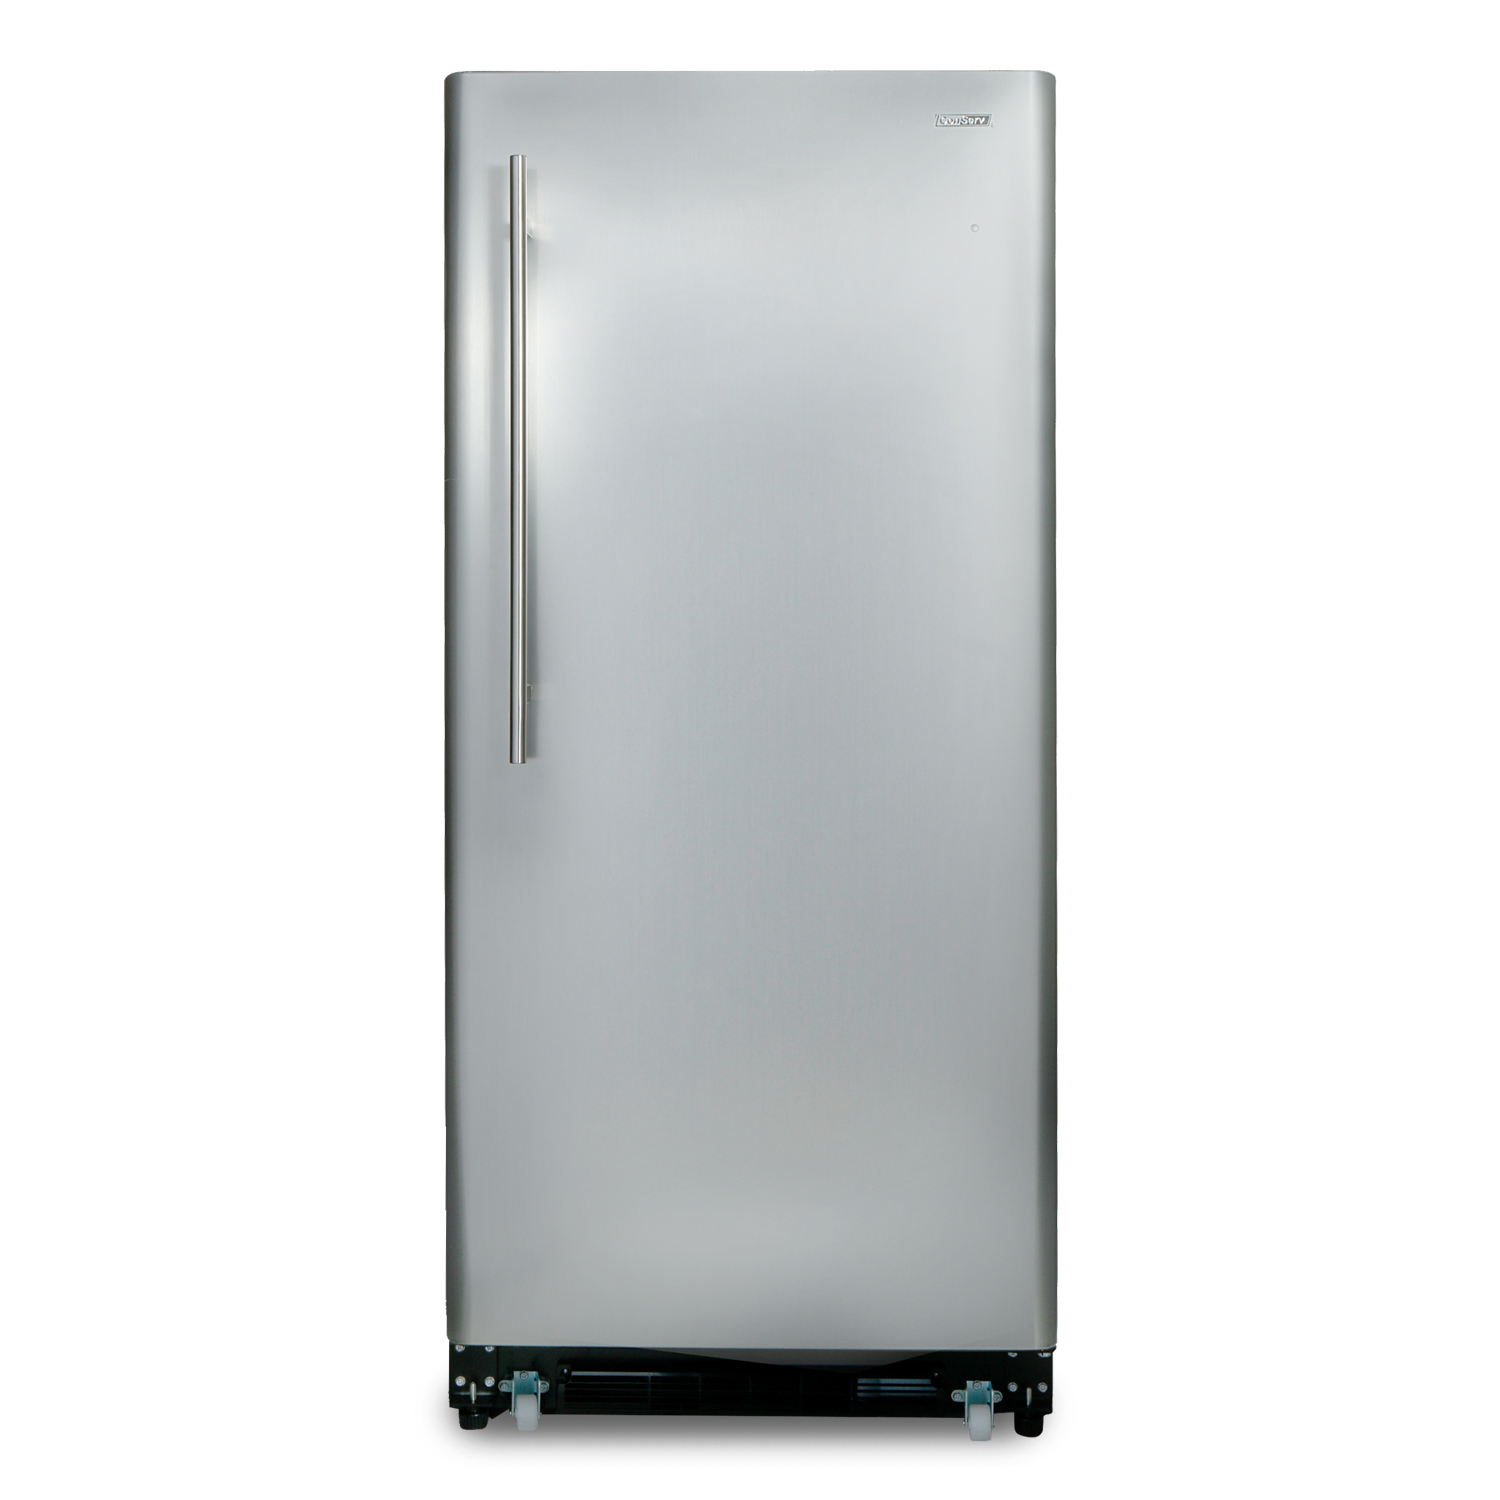 Conserv 17 cu. ft. Convertible <br> Upright Freezer-Refrigerator